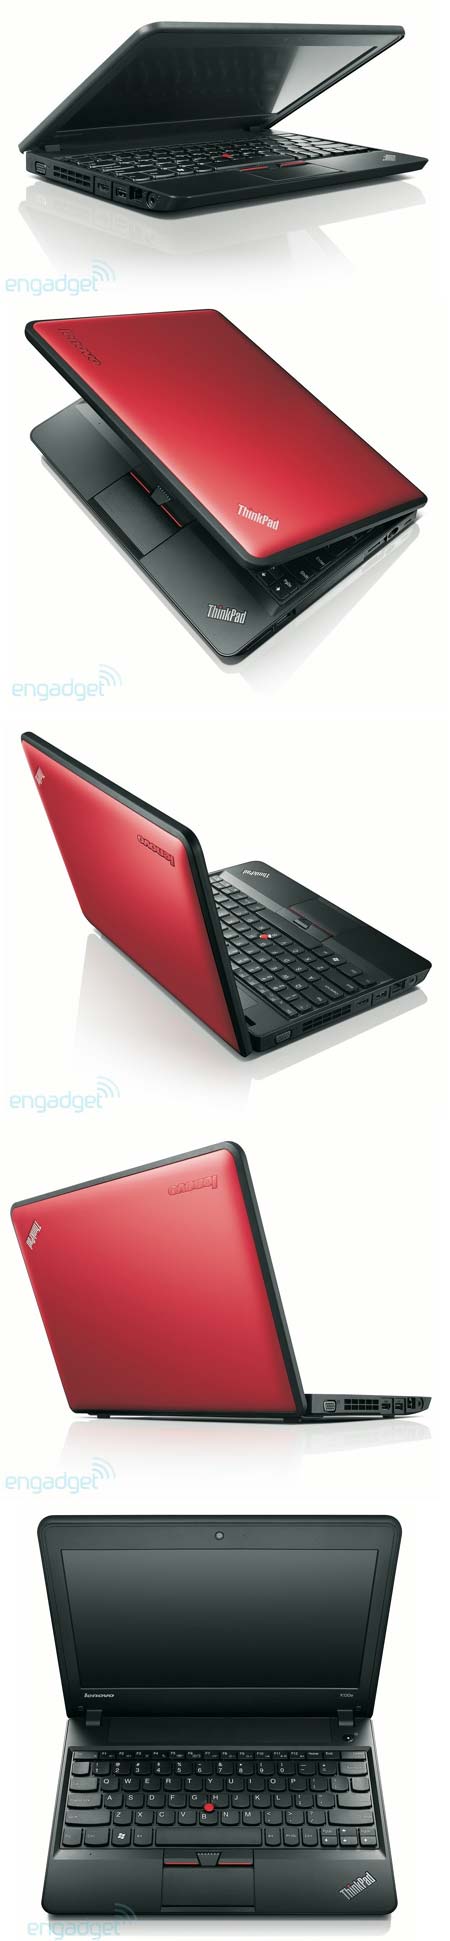 Ученический лэптоп Lenovo ThinkPad X130e